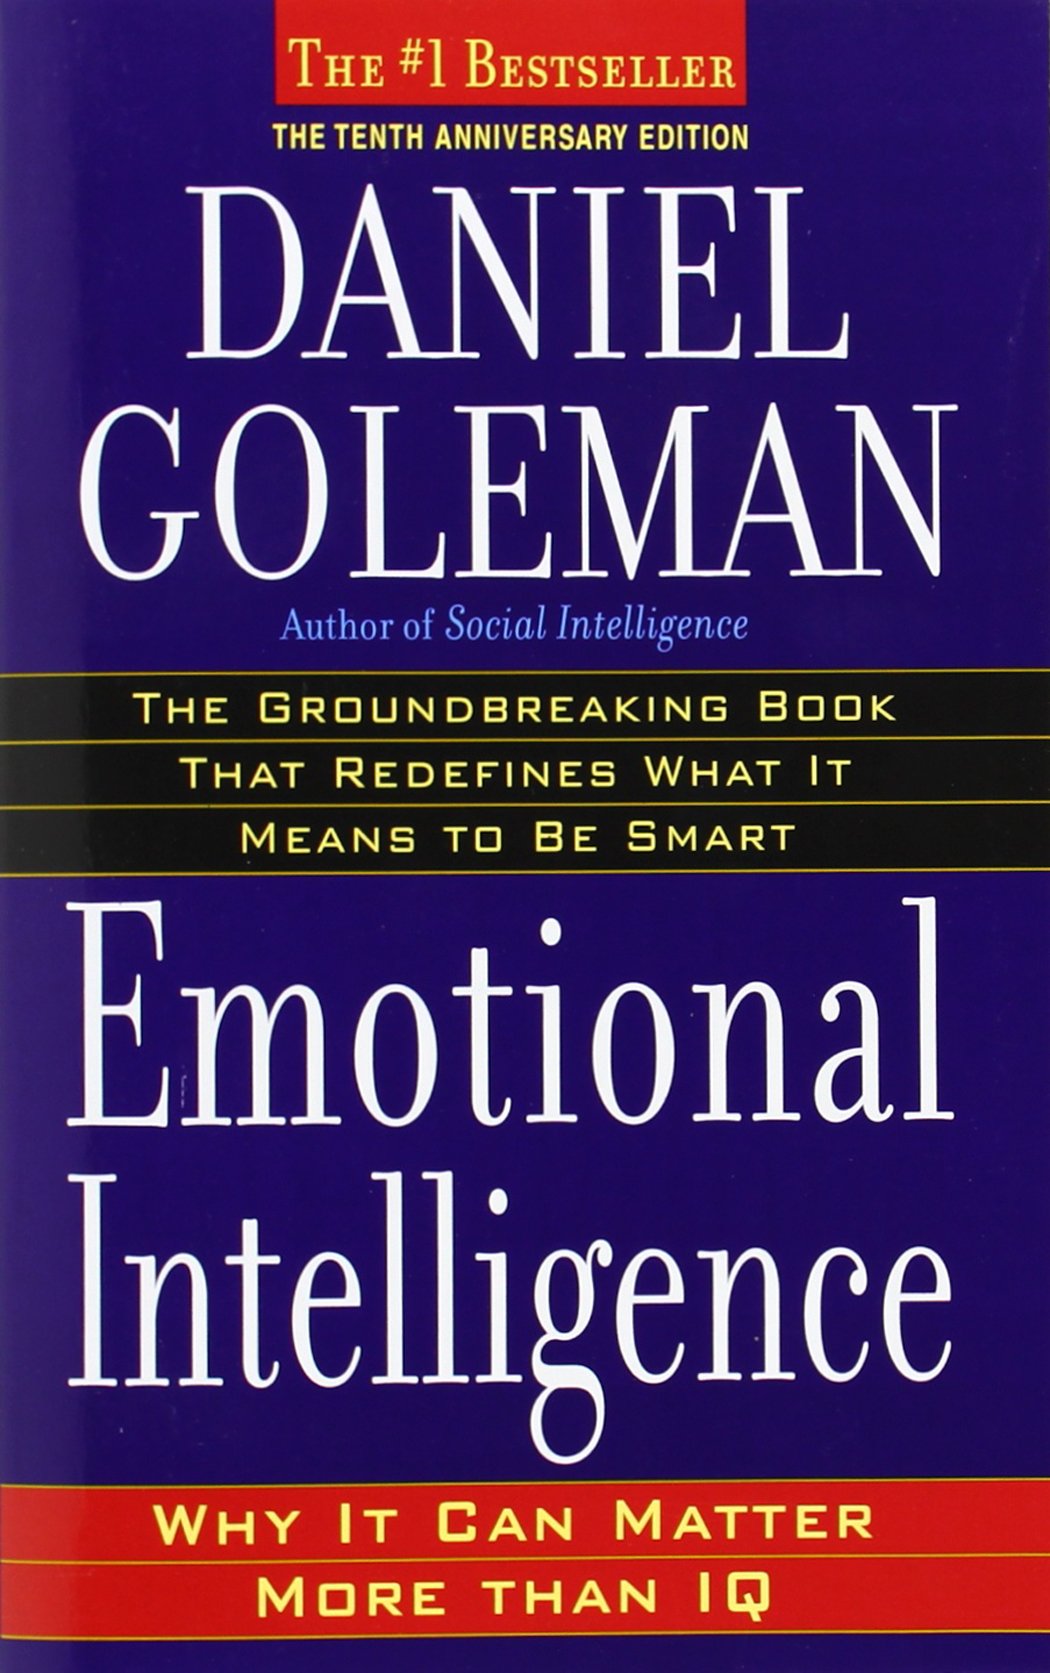 emotional intelligence quotes daniel goleman